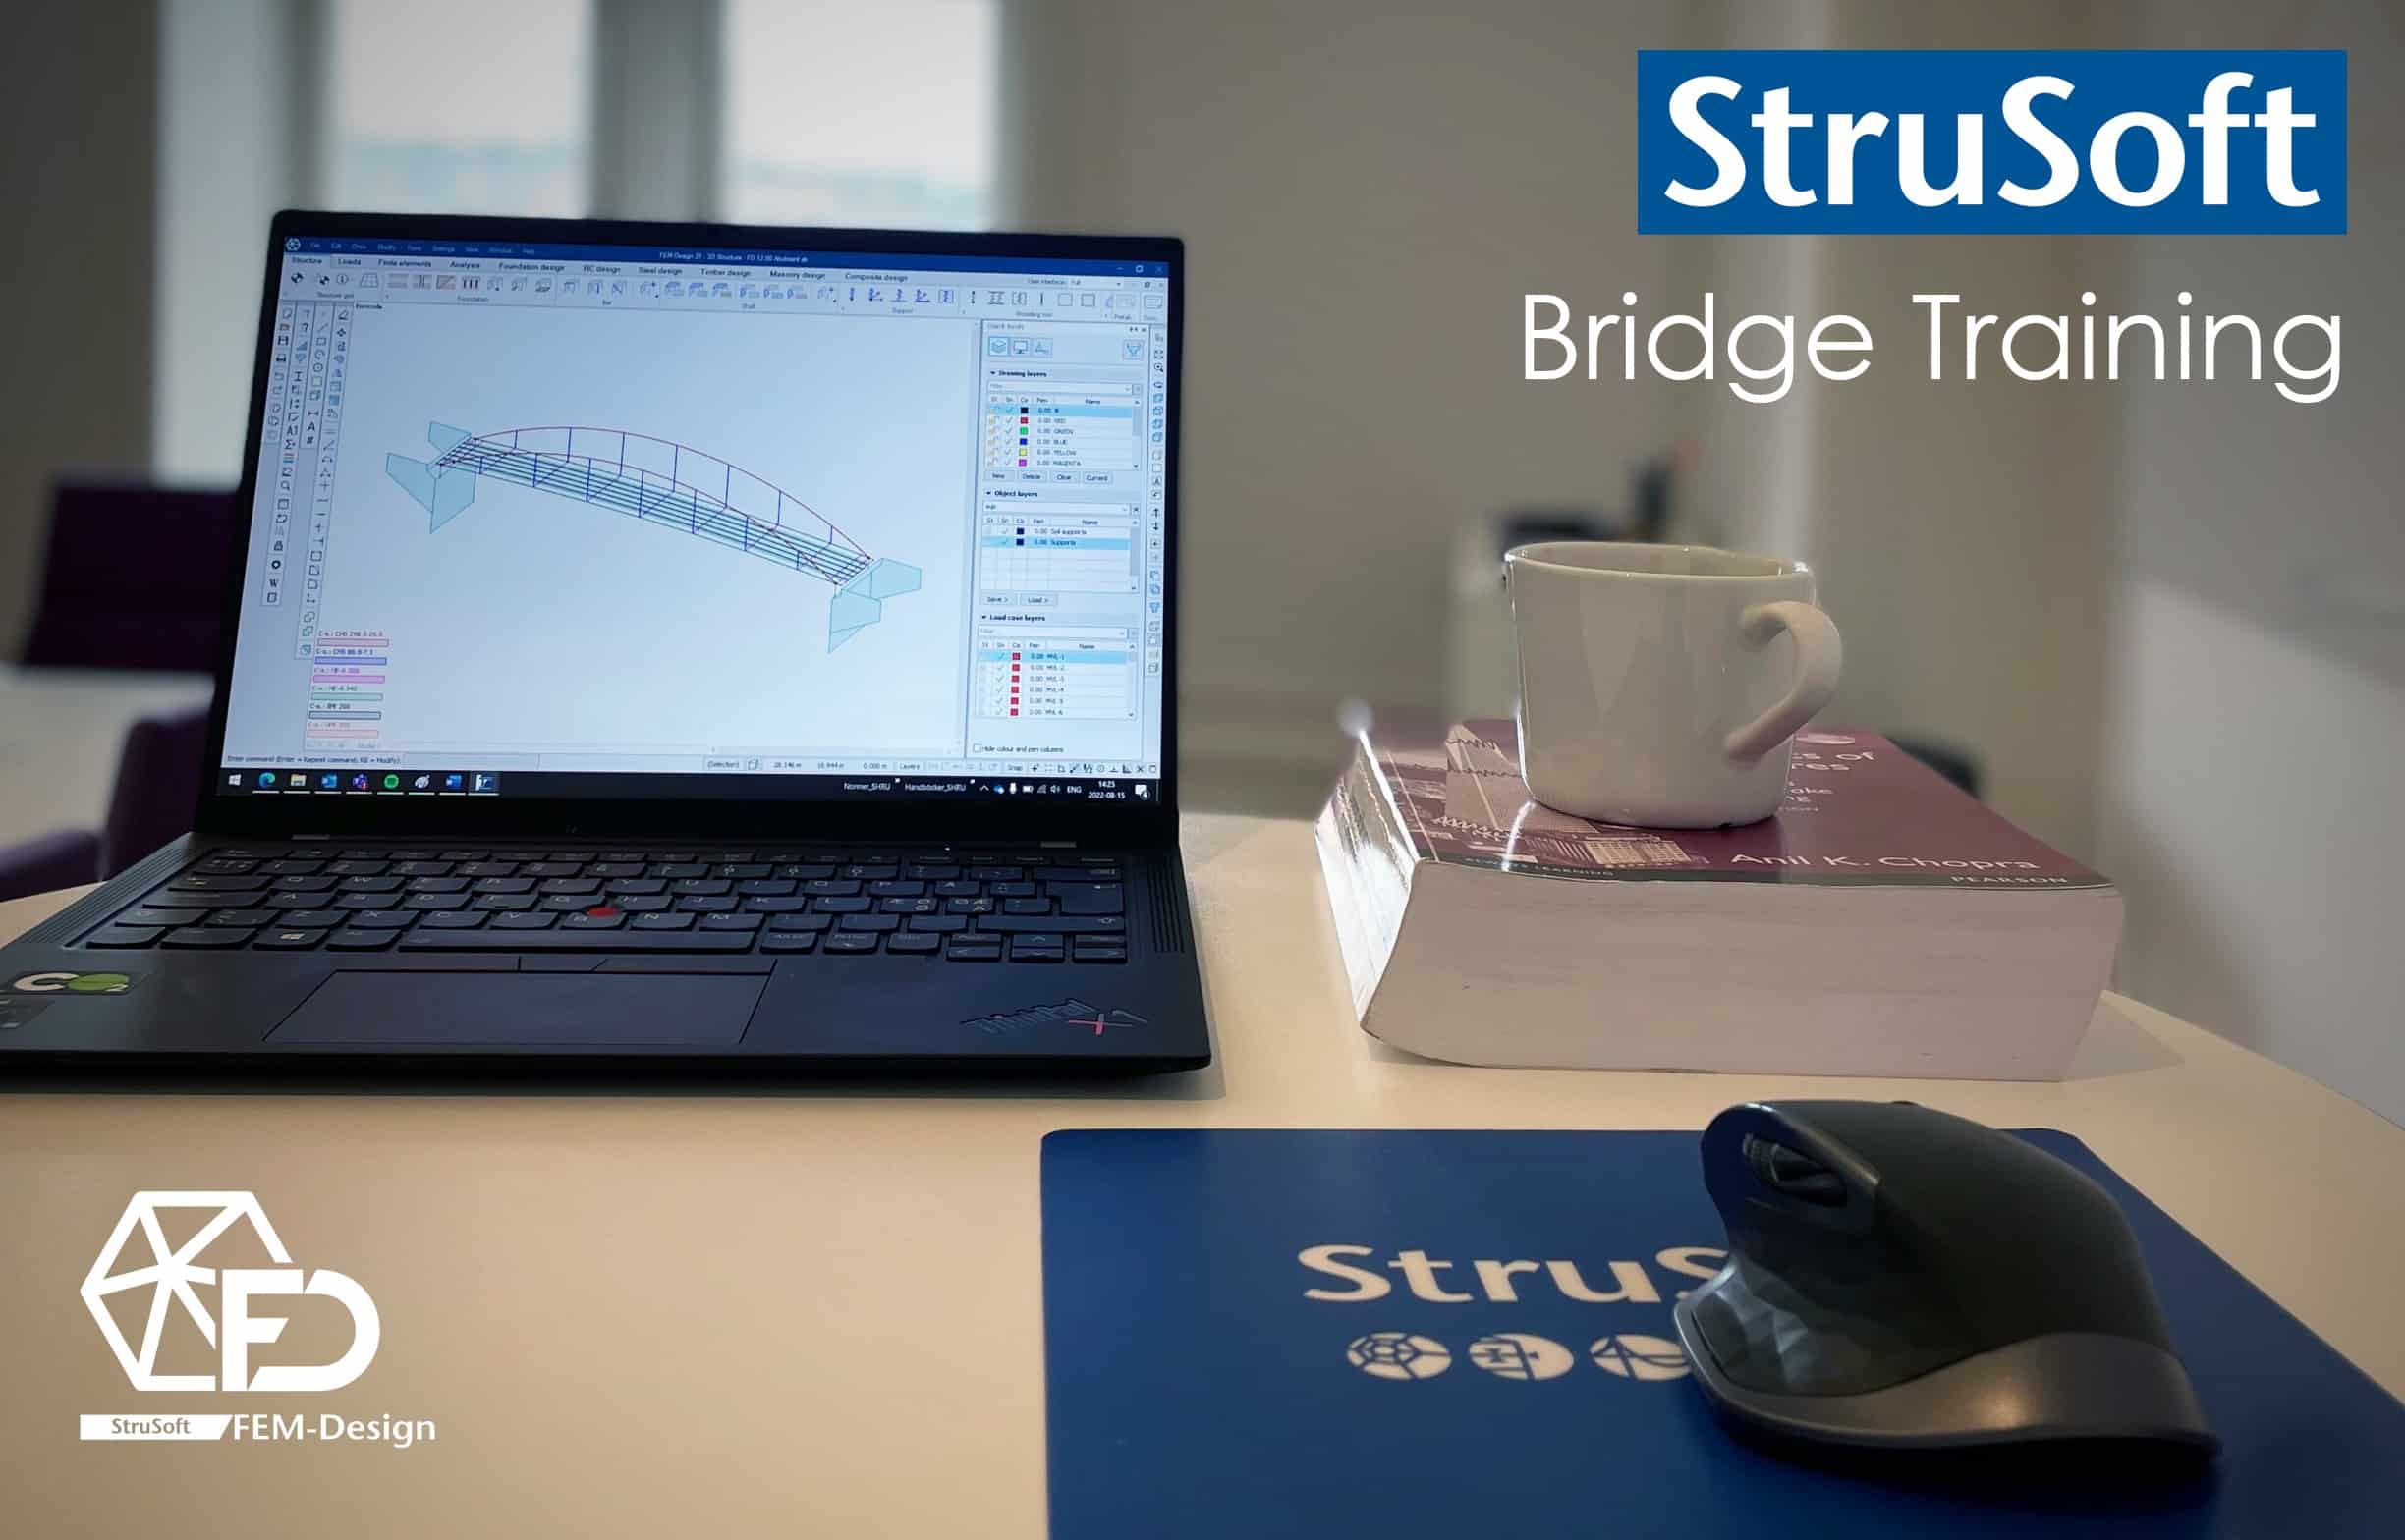 StruSoft Bridge training (GC-broar)